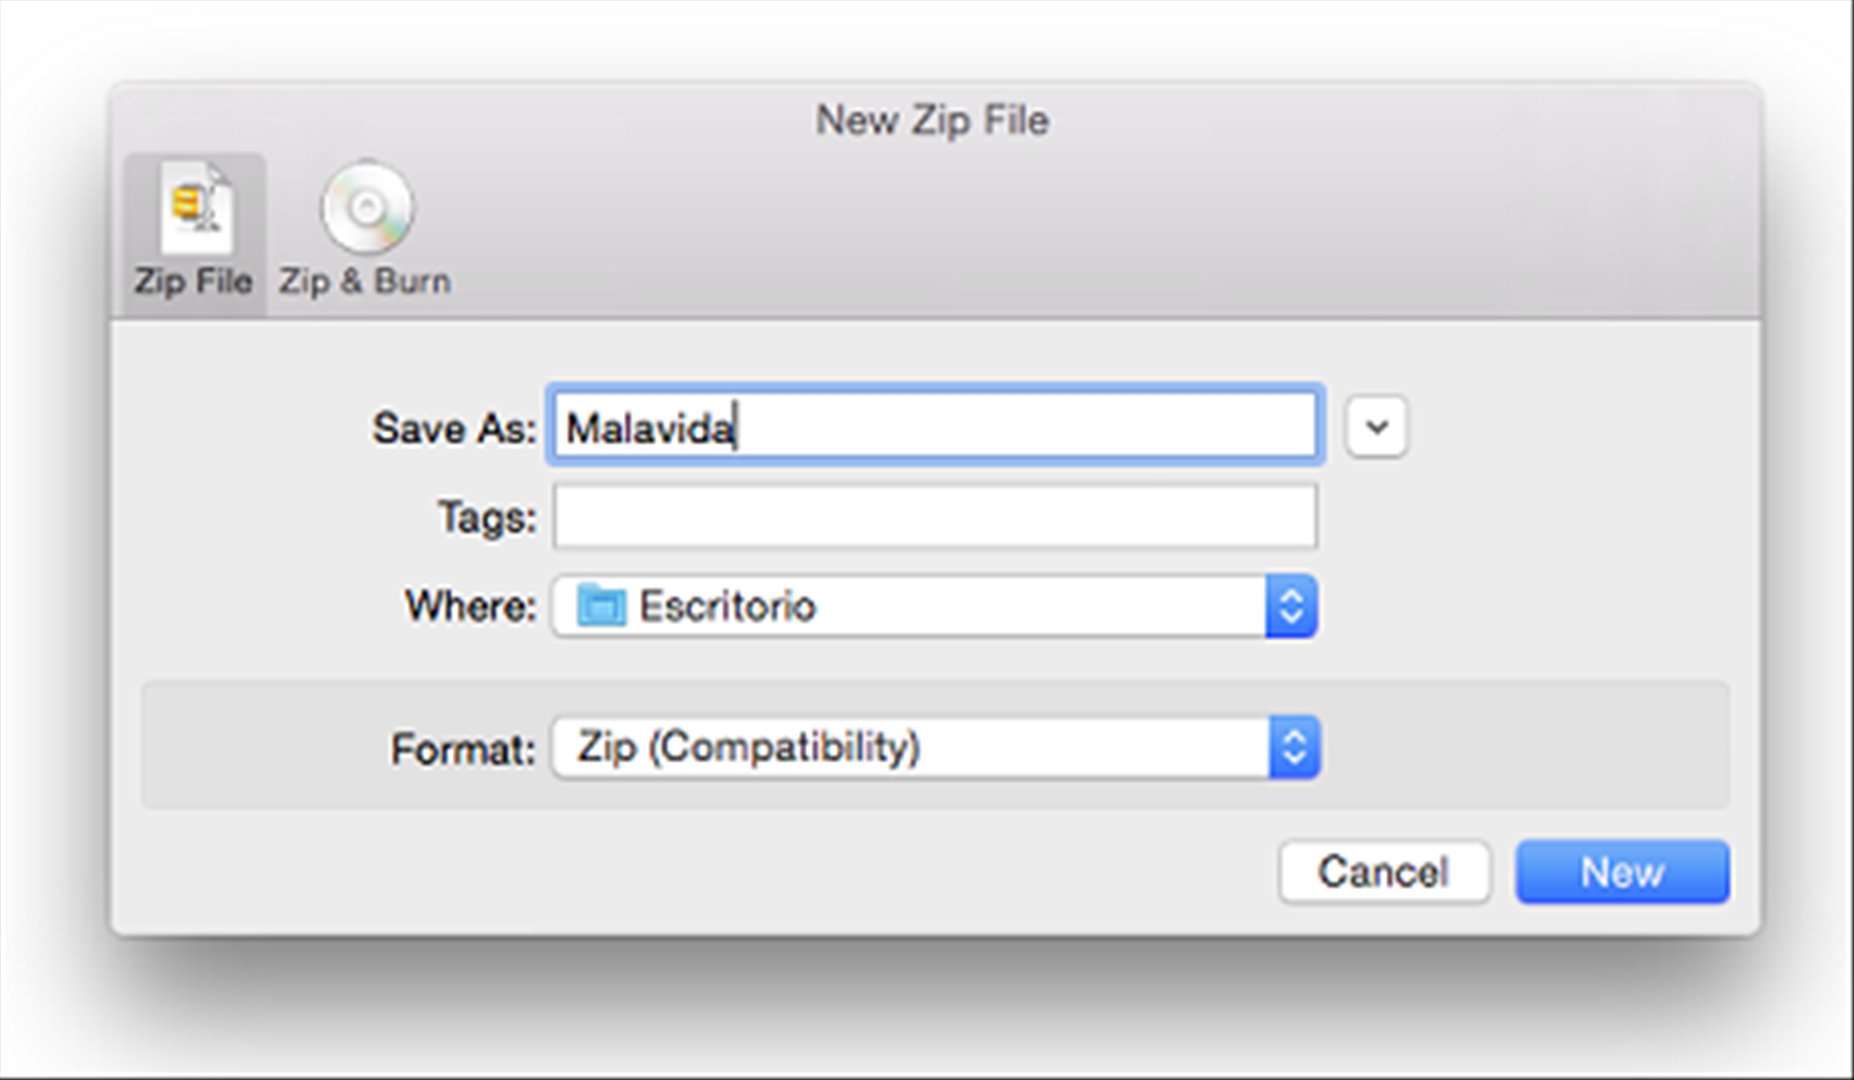 Rar file converter software, free download for mac